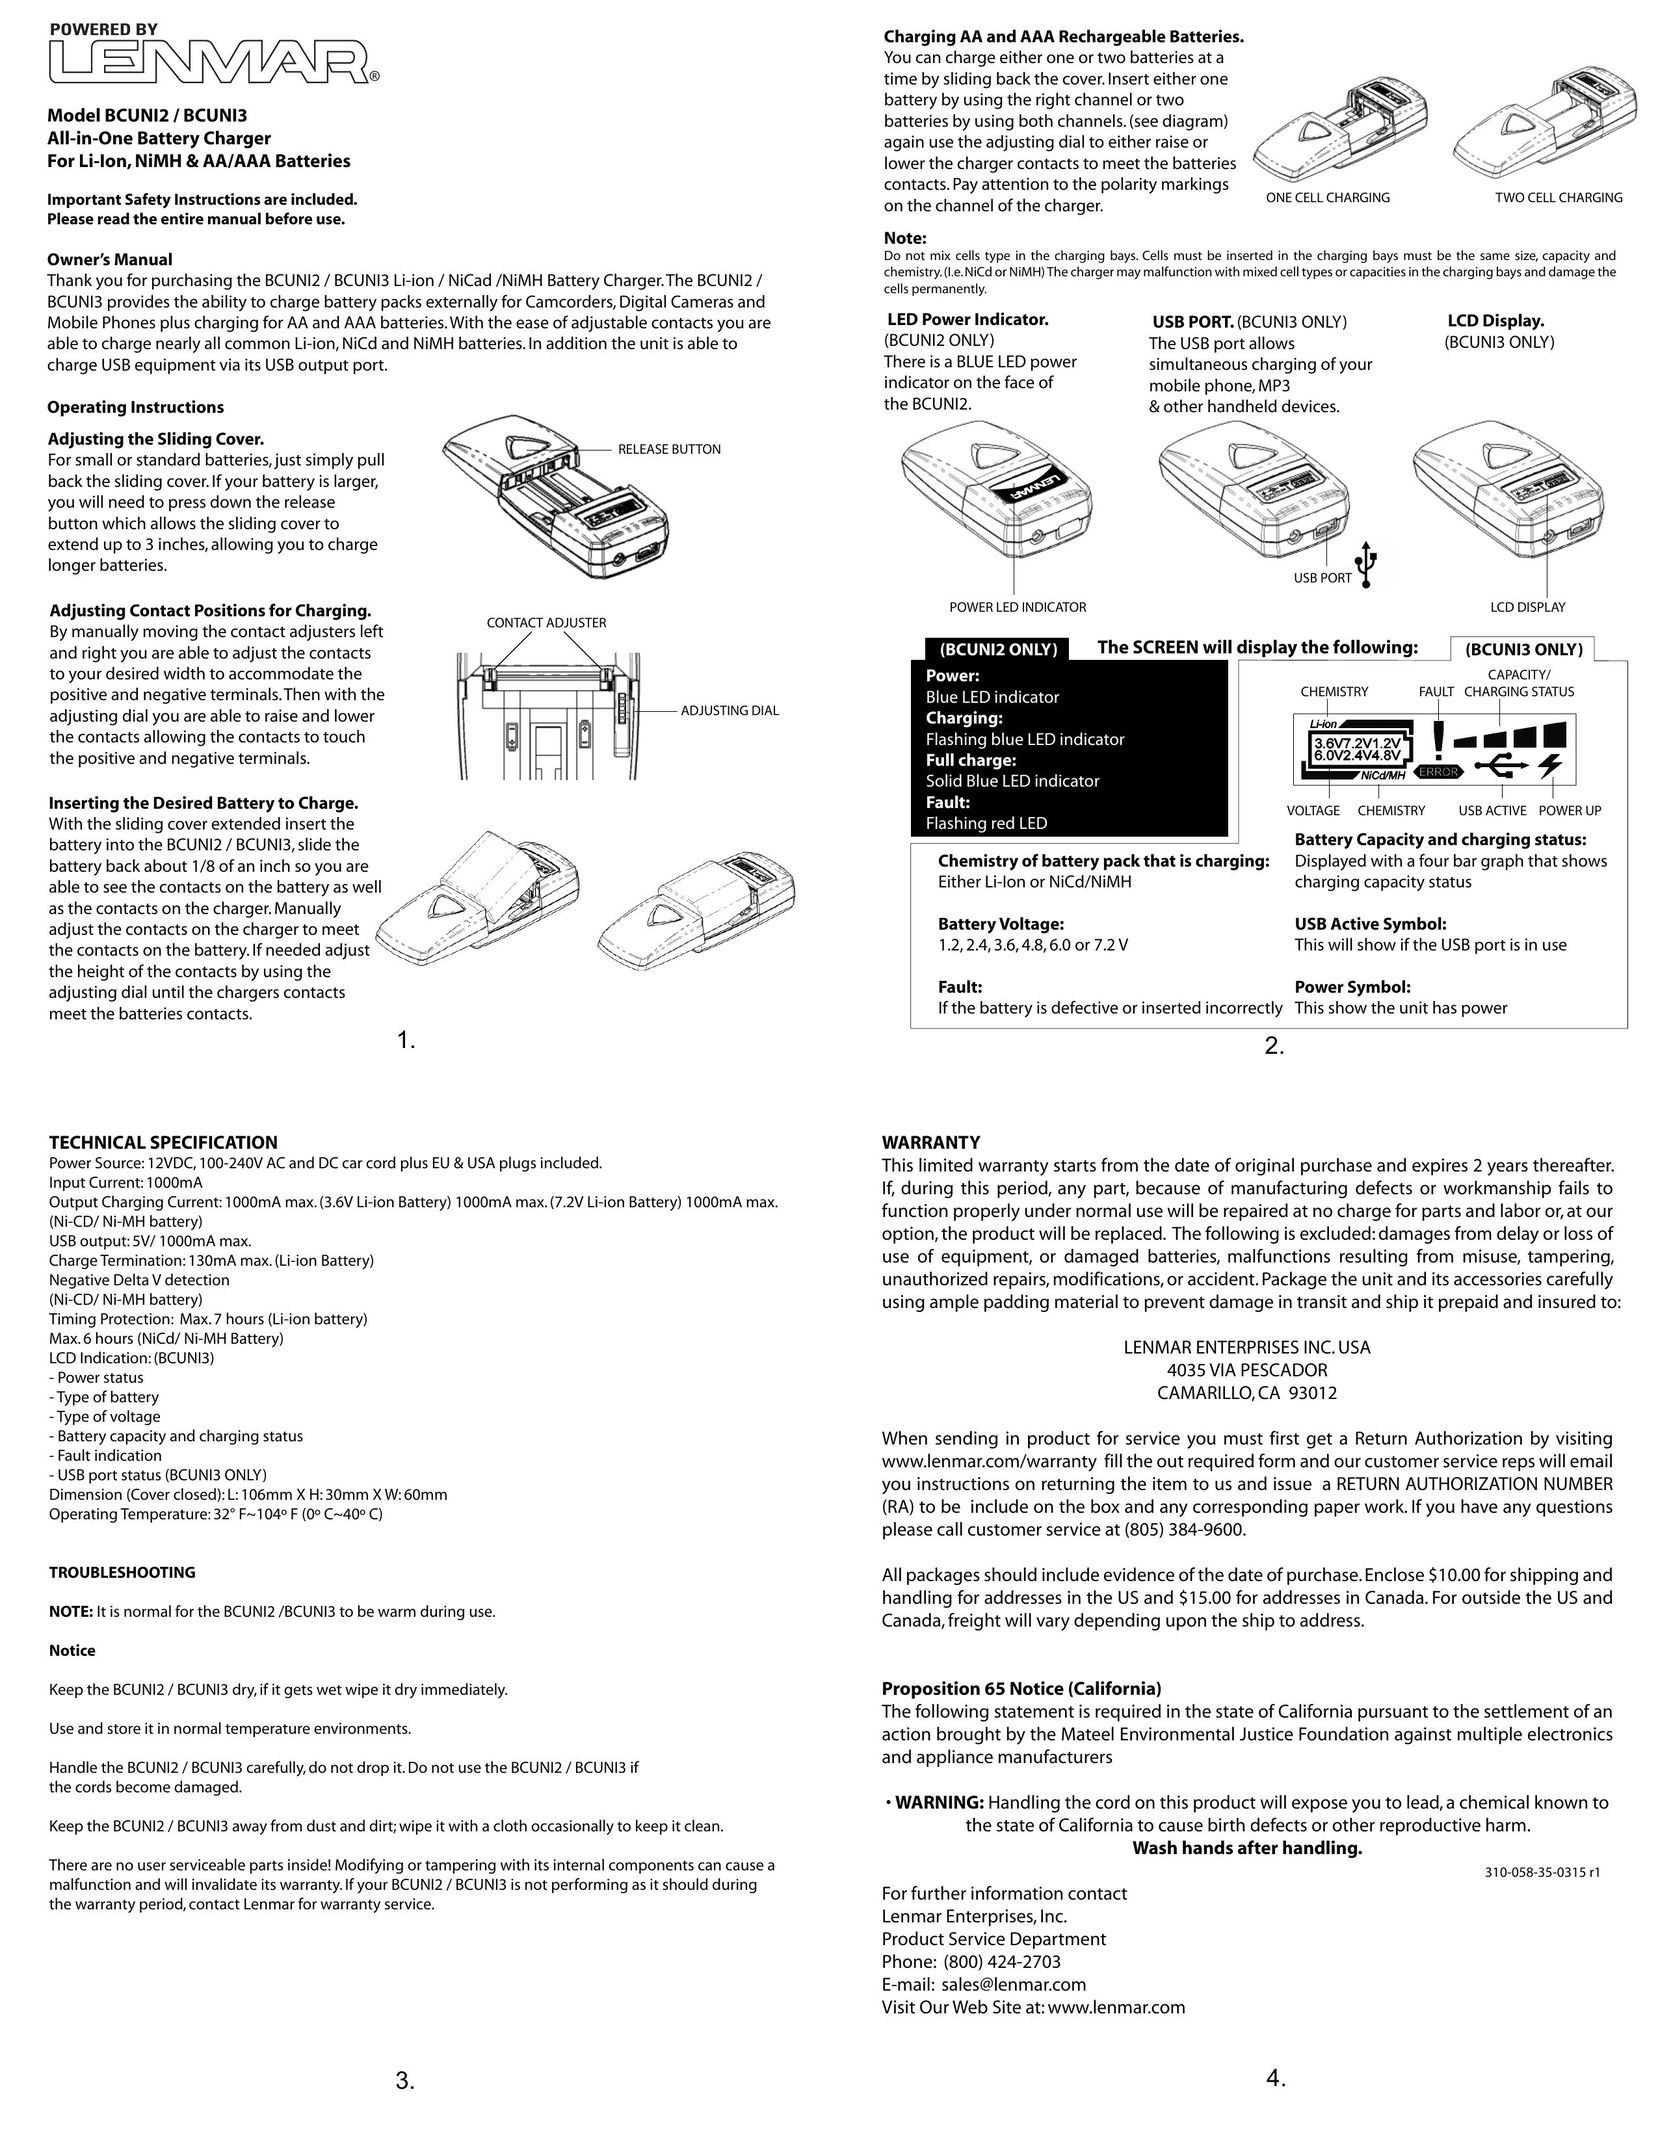 Lenmar Enterprises BCUNI3 Battery Charger User Manual